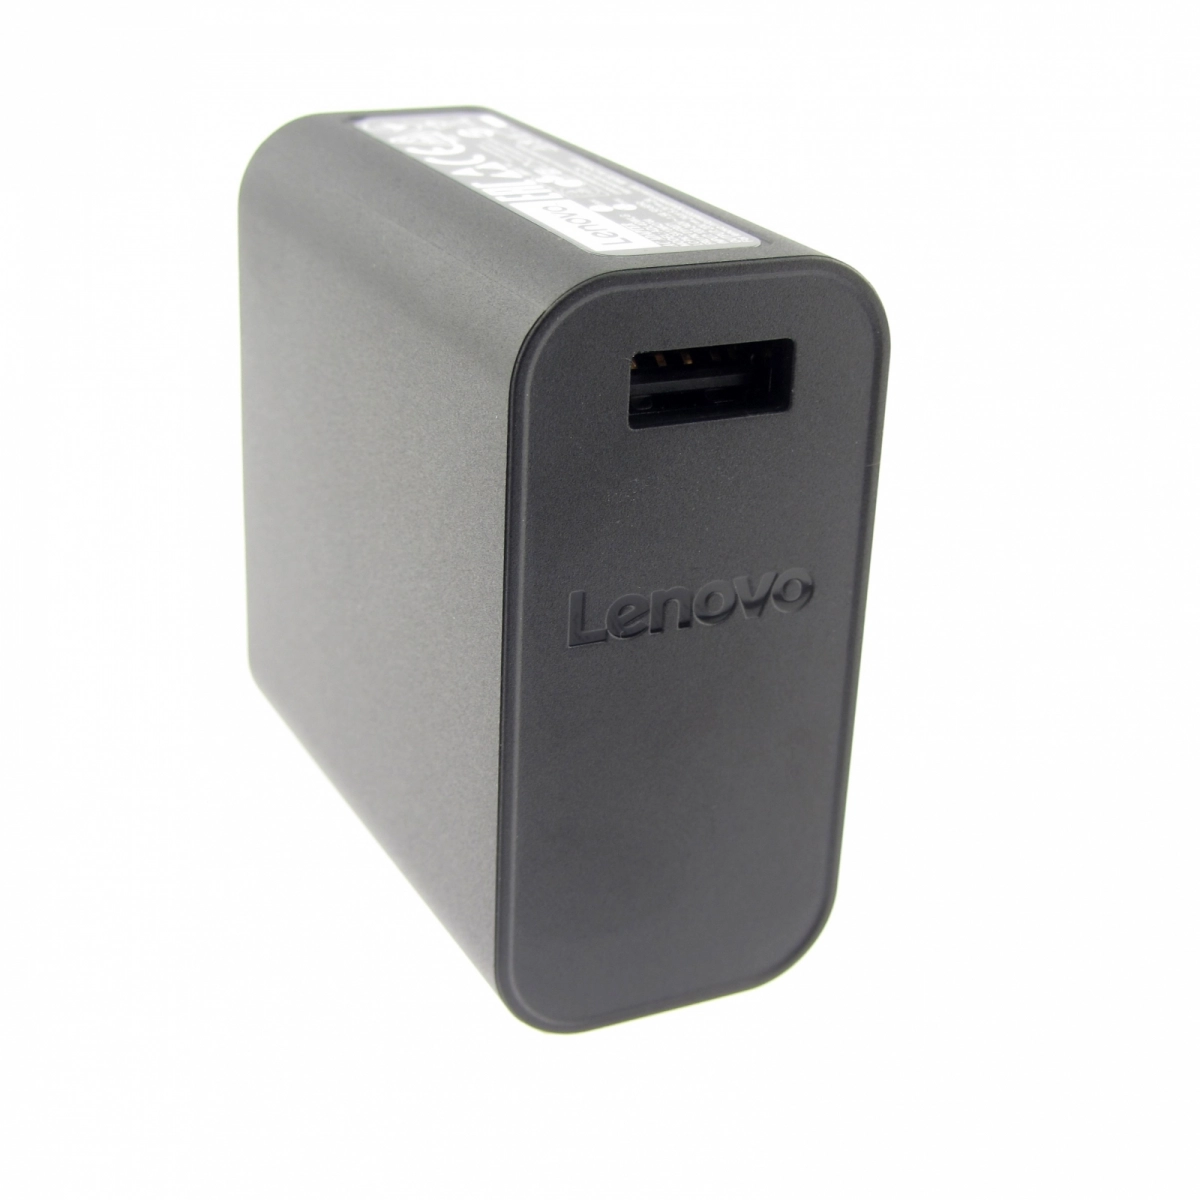 Original Netzteil für LENOVO 36200561, 20V, 2A, Stecker USB, ohne USB-Kabel